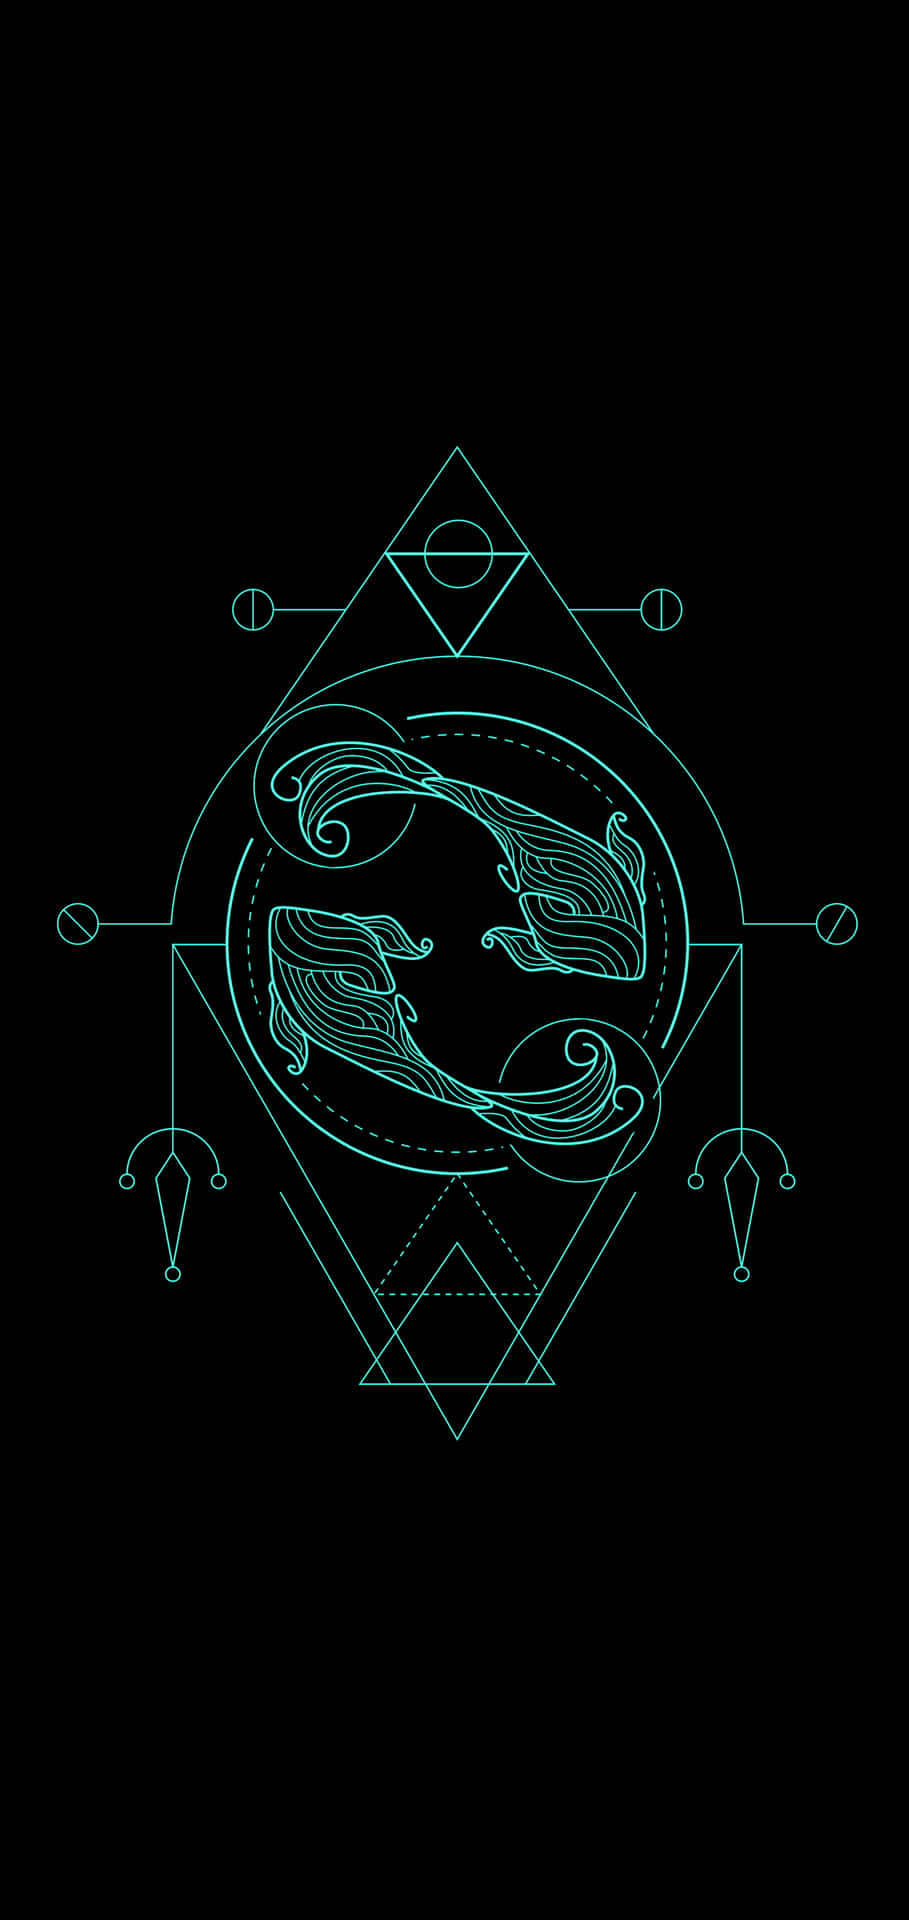 Engrön Logotyp Med Geometrisk Design Wallpaper